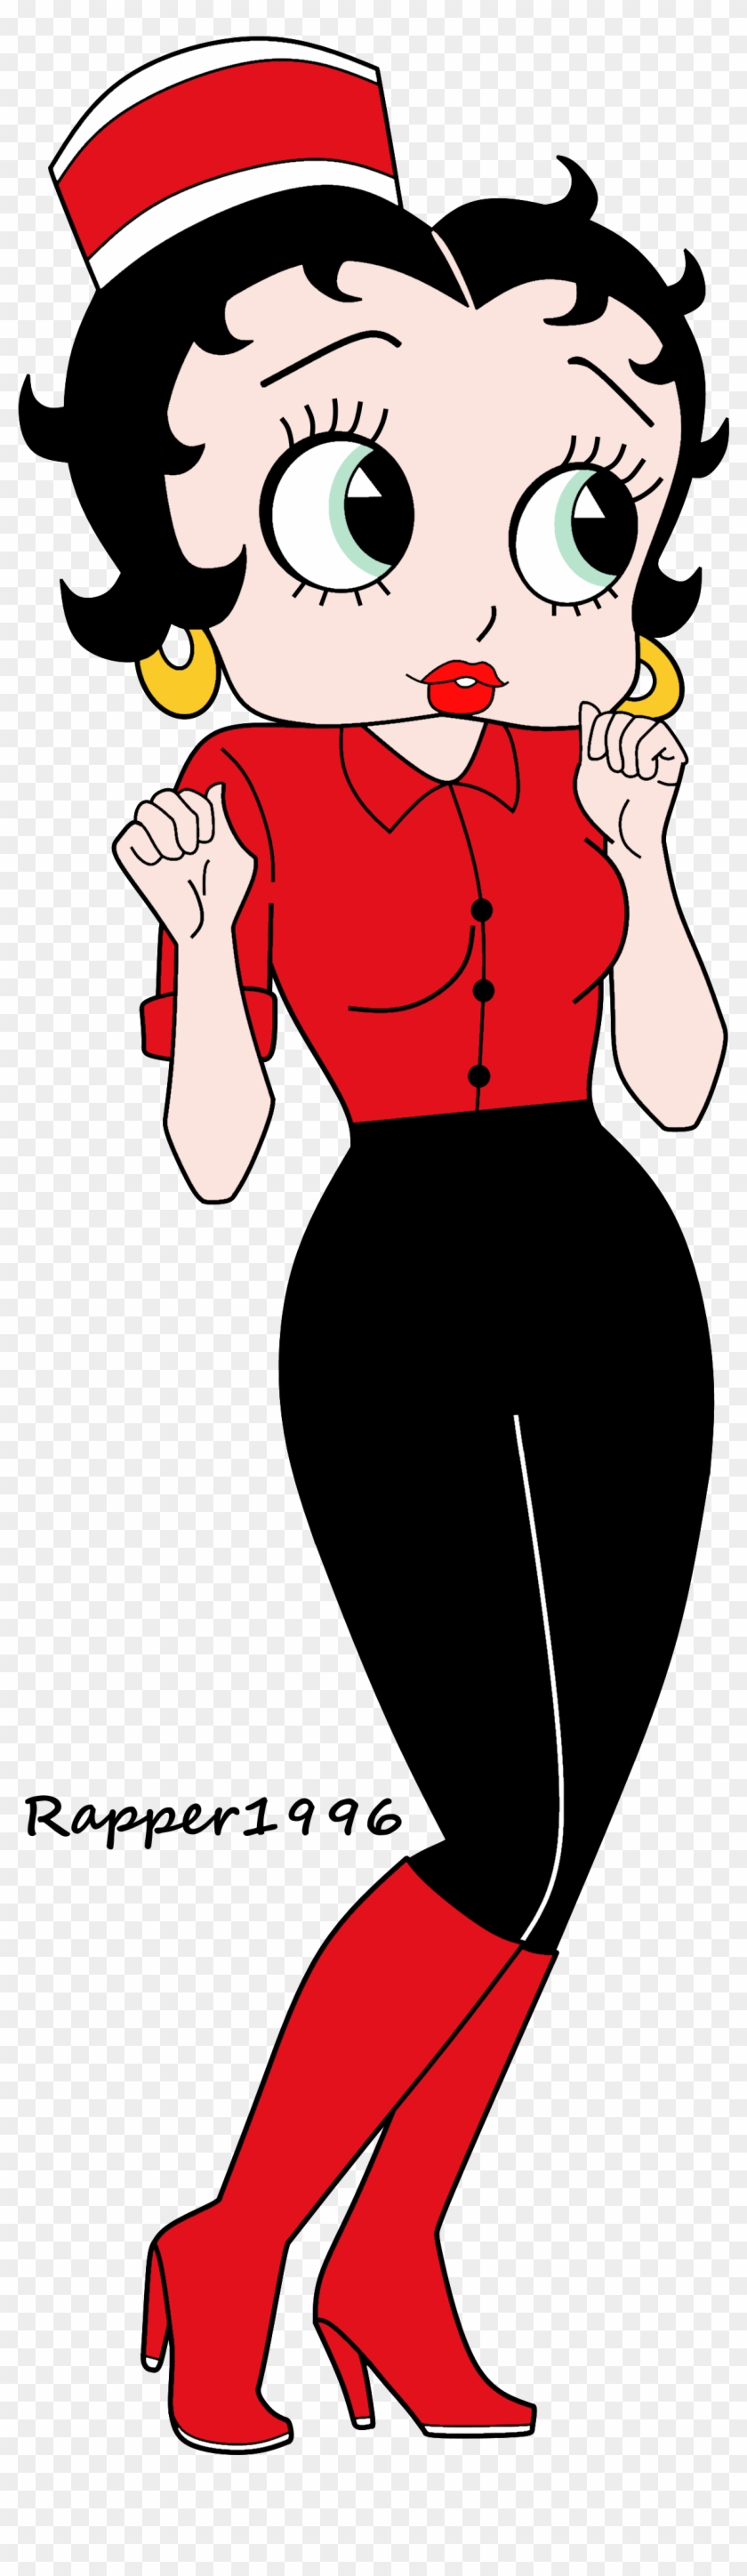 Betty Boop Anime Waitress Render By Rapper1996 - Betty Boop Anime Waitress Render By Rapper1996 #739153